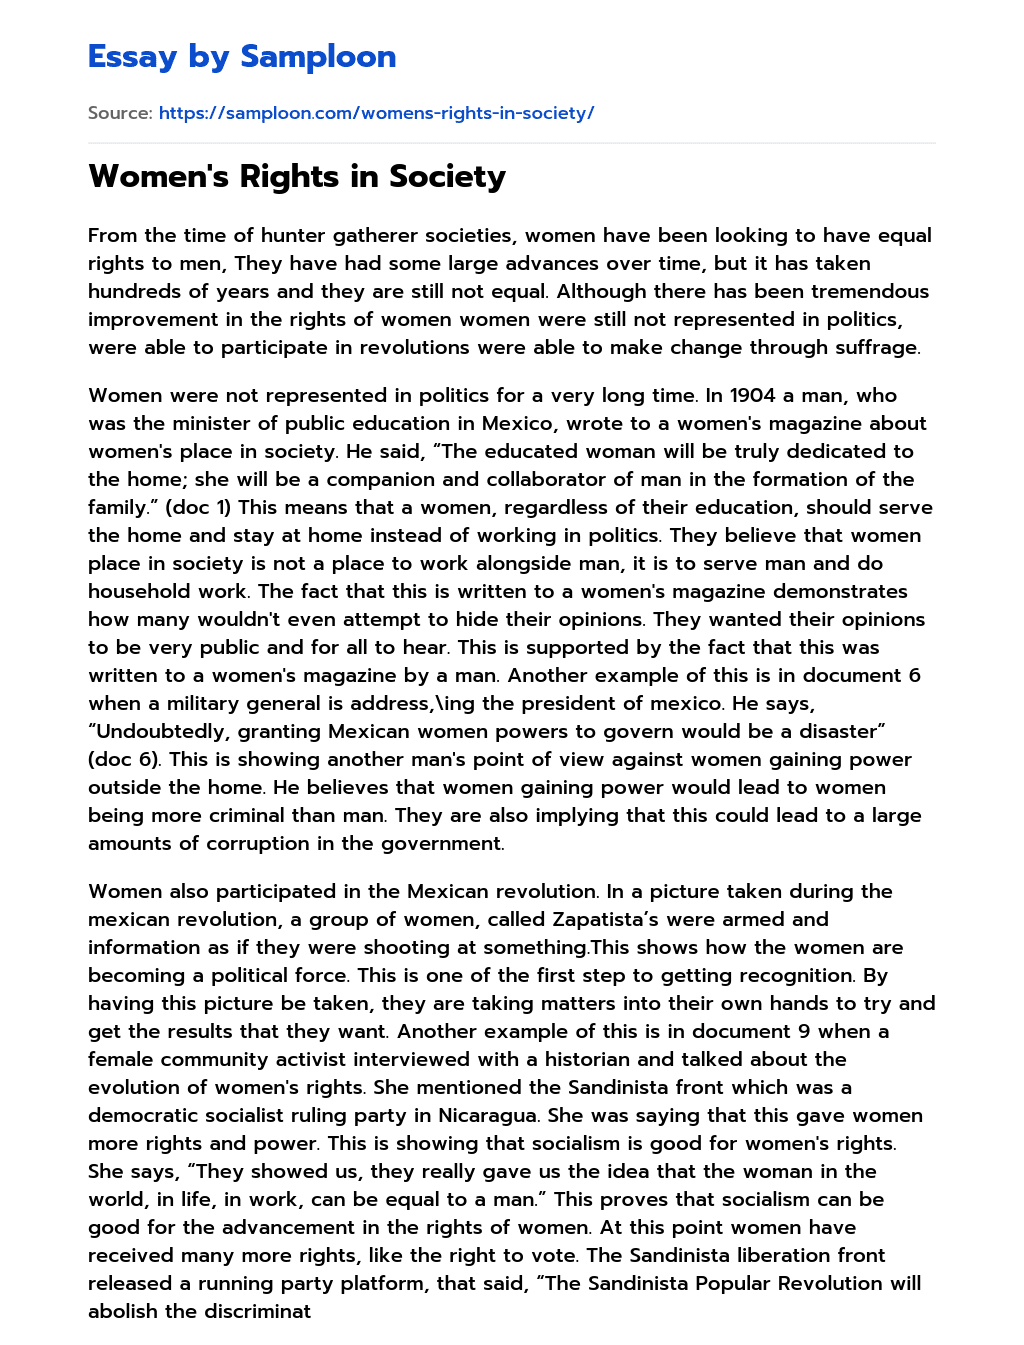 Women’s Rights in Society essay